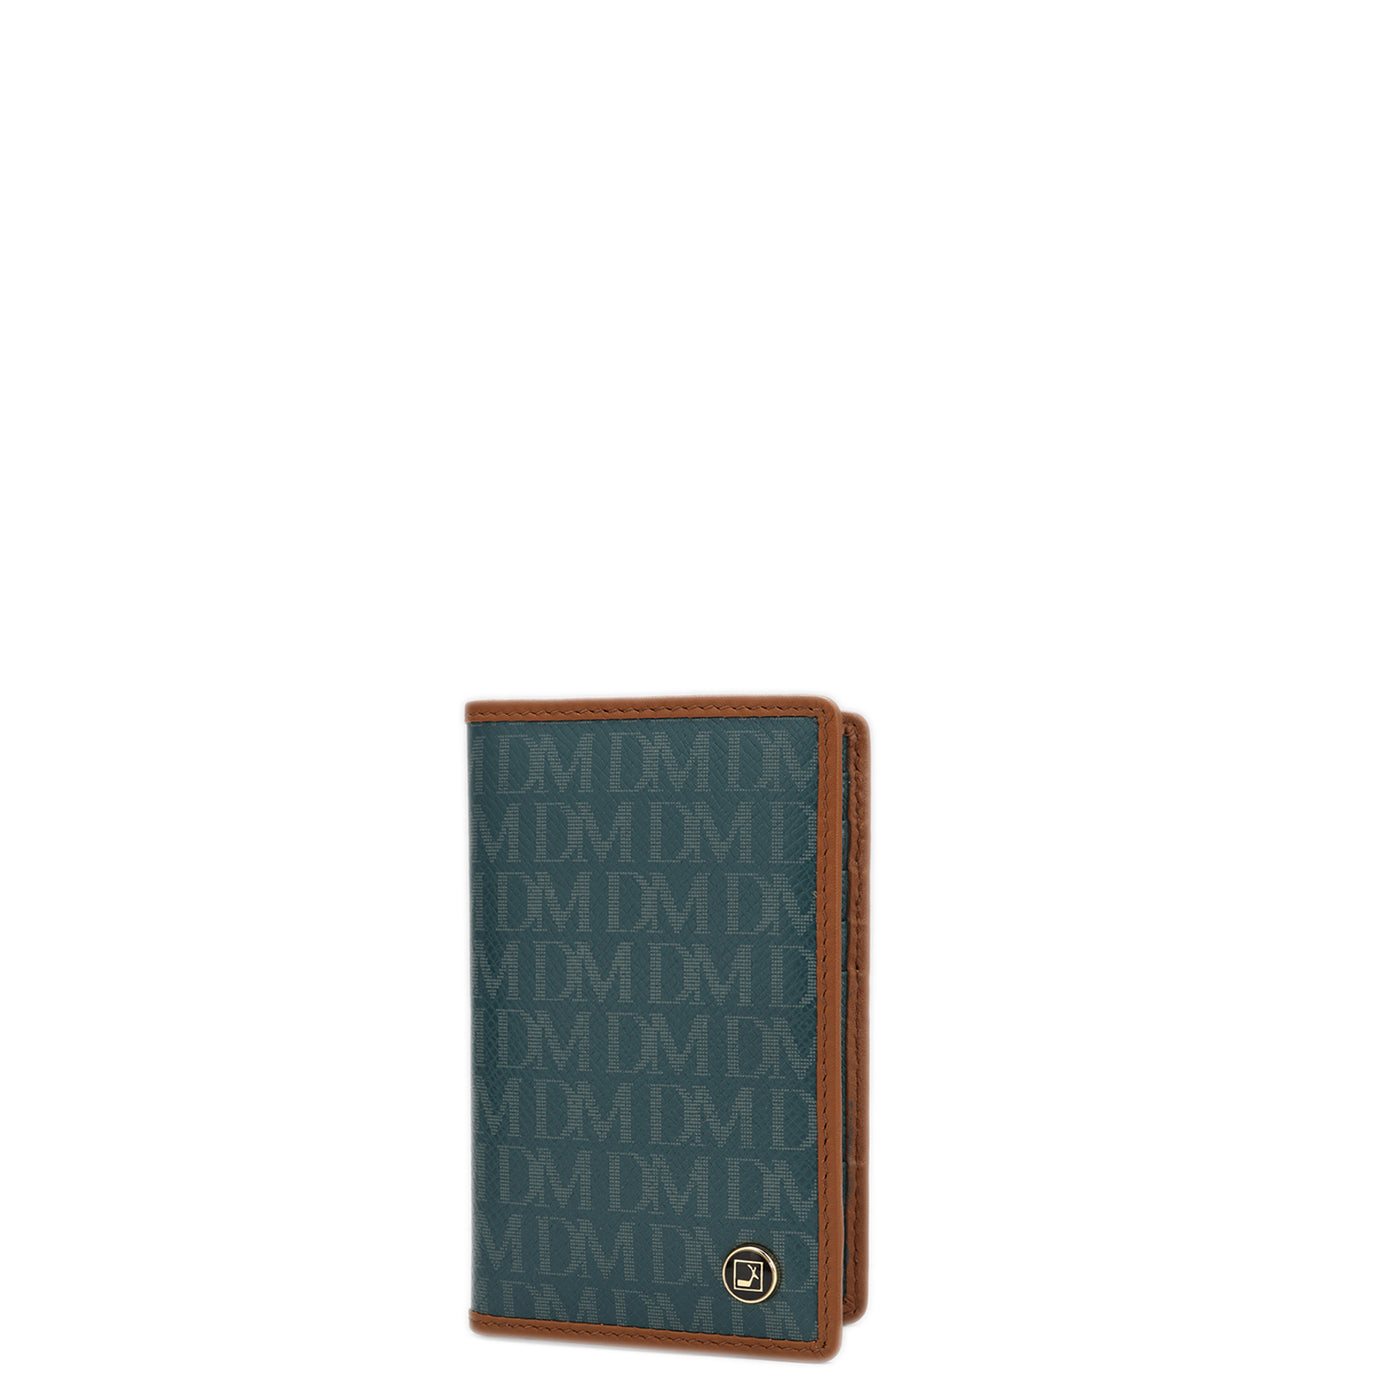 Monogram Leather Card Case - Octane